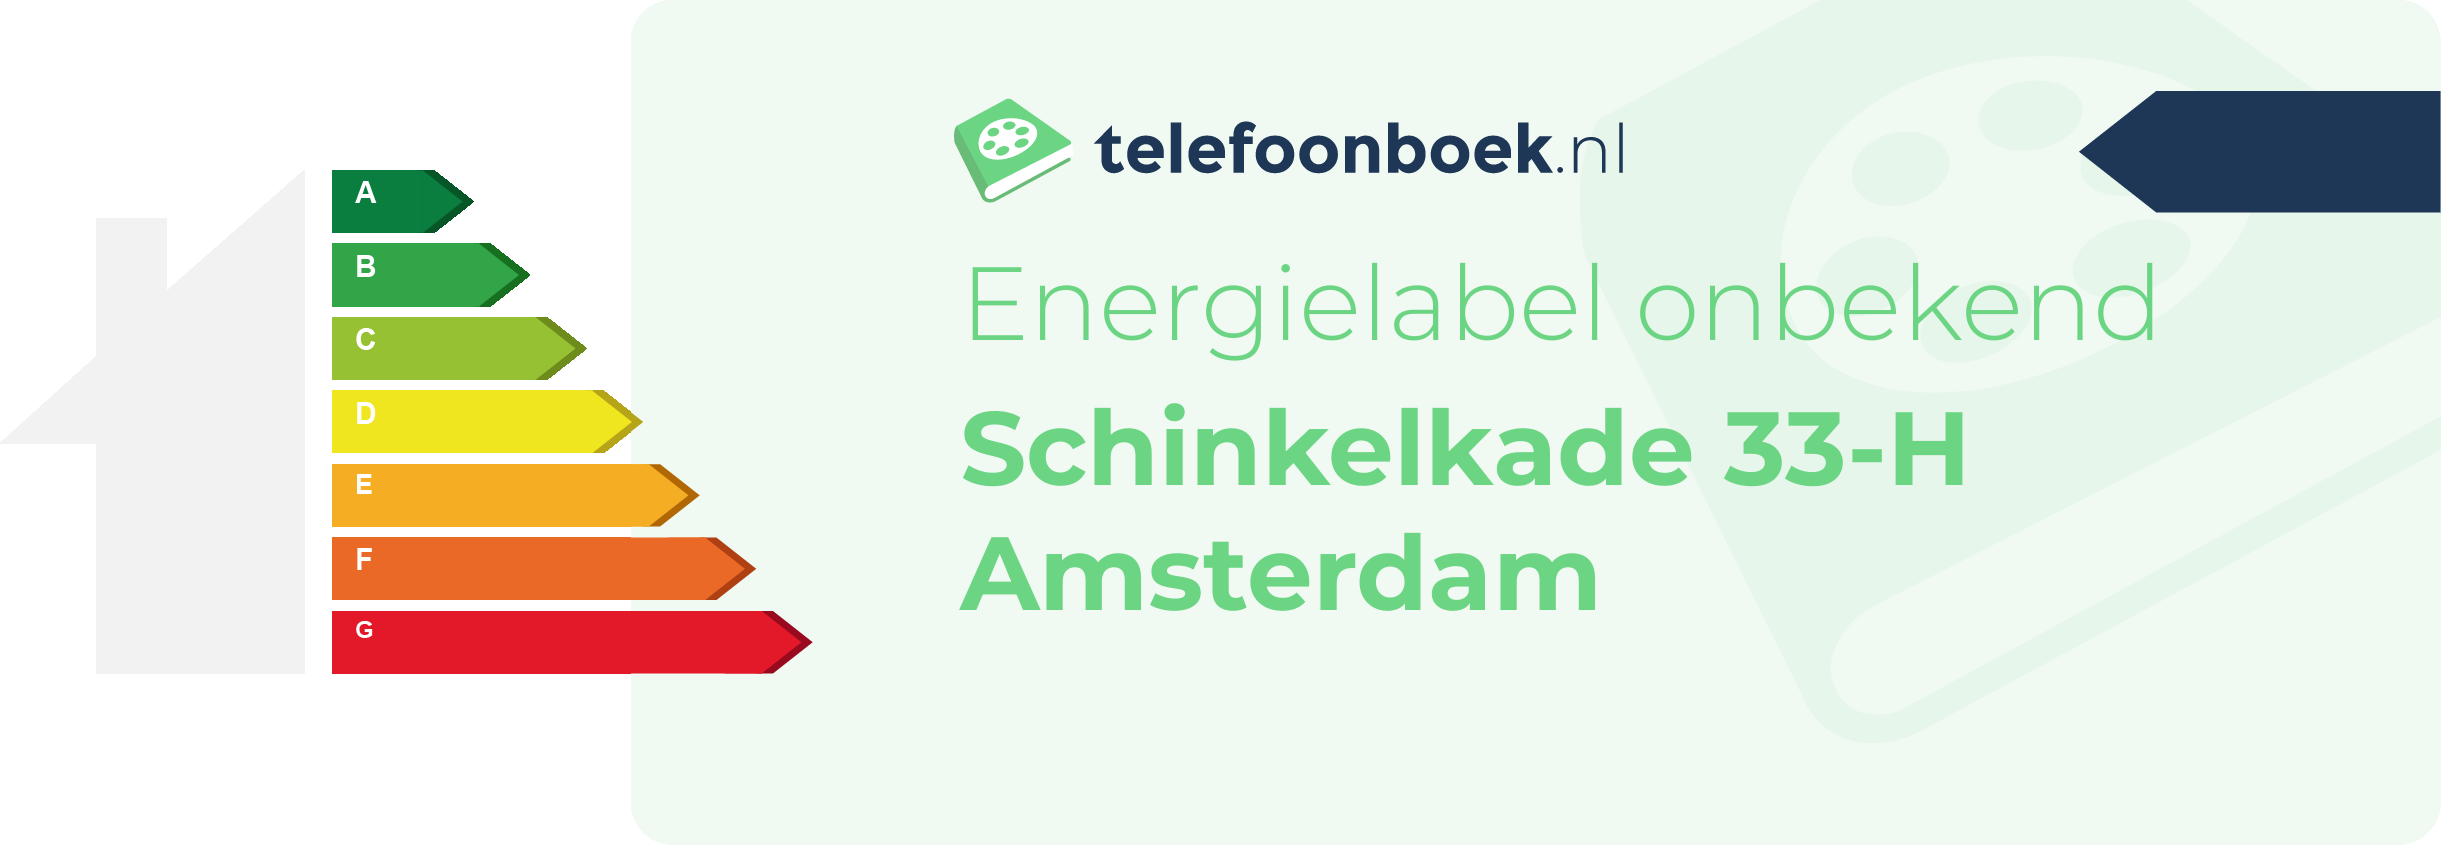 Energielabel Schinkelkade 33-H Amsterdam